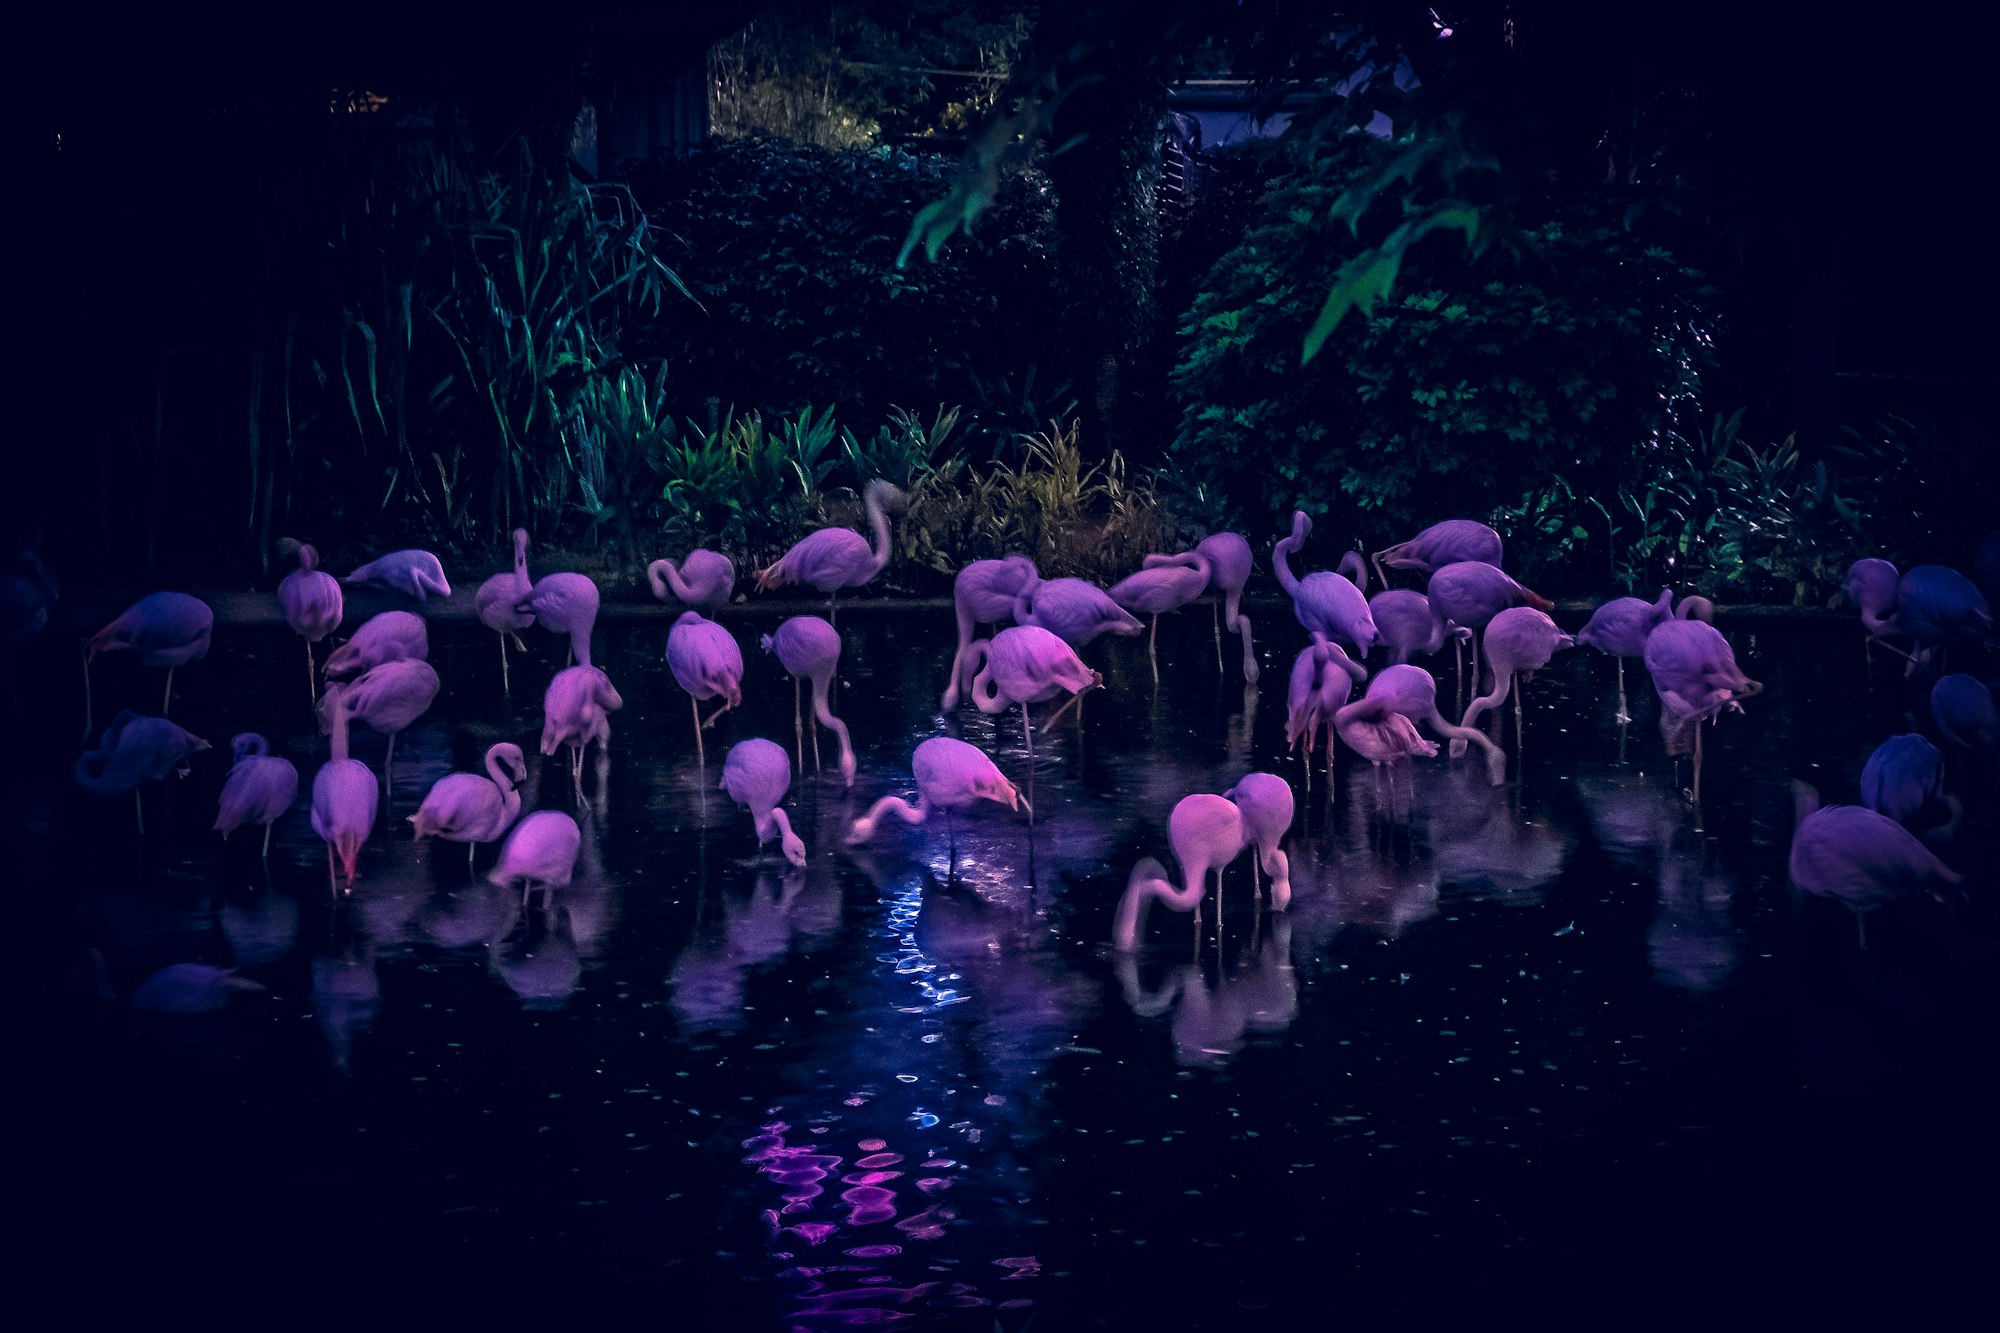 Night Visions @ Nashville Zoo